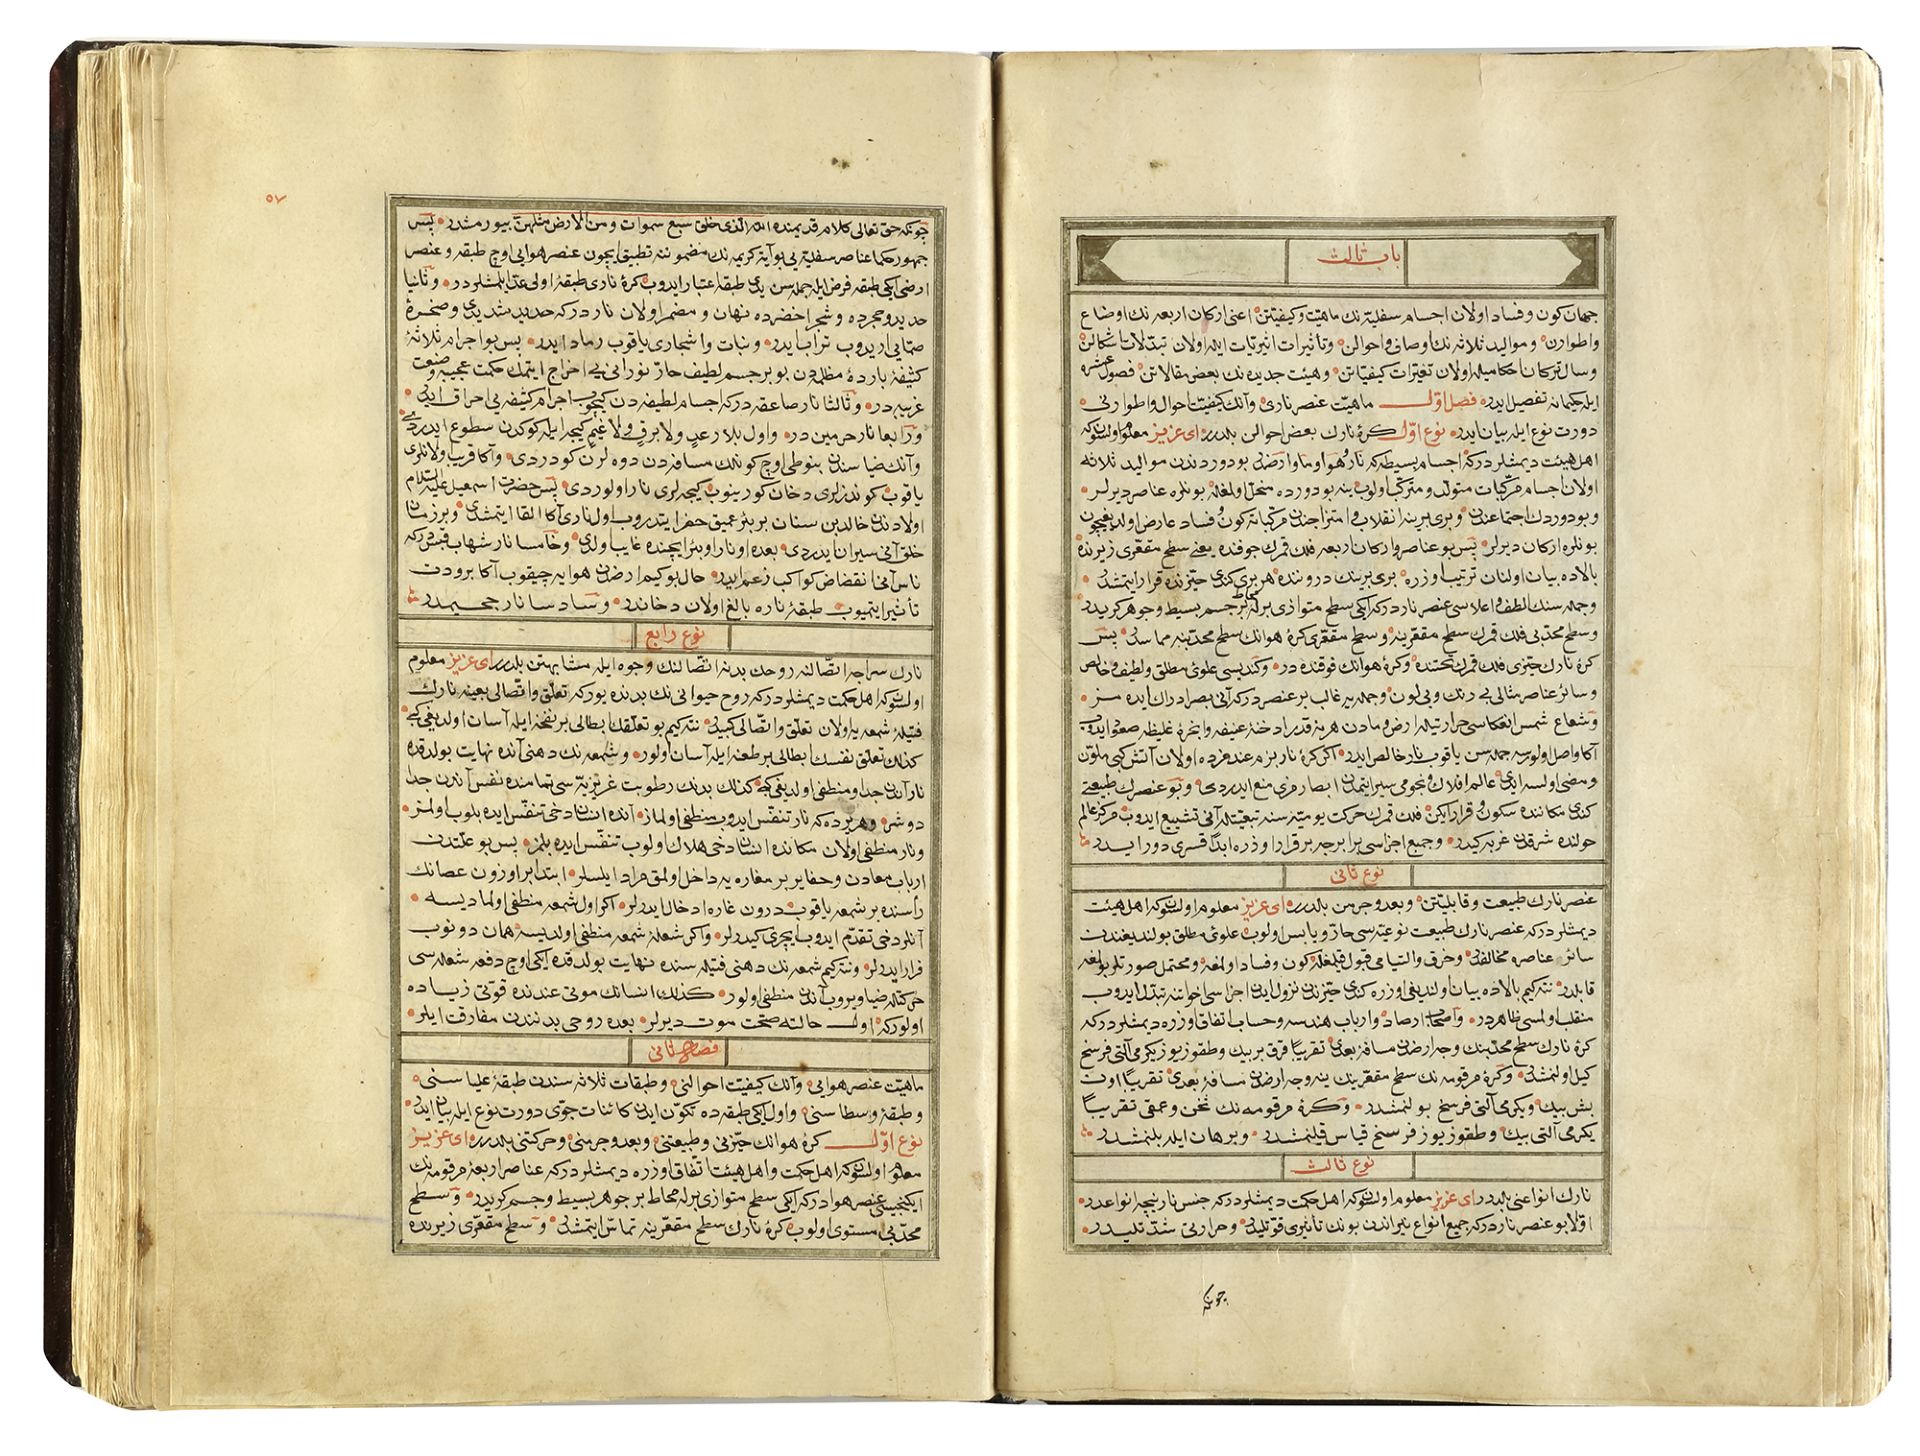 MARIFETNAME, IBRAHIM HAKKI, COPIED BY SAE'D ALLAH BIN ALI BIN AHMED, TURKEY, 1221 AH/1806 AD - Image 21 of 58